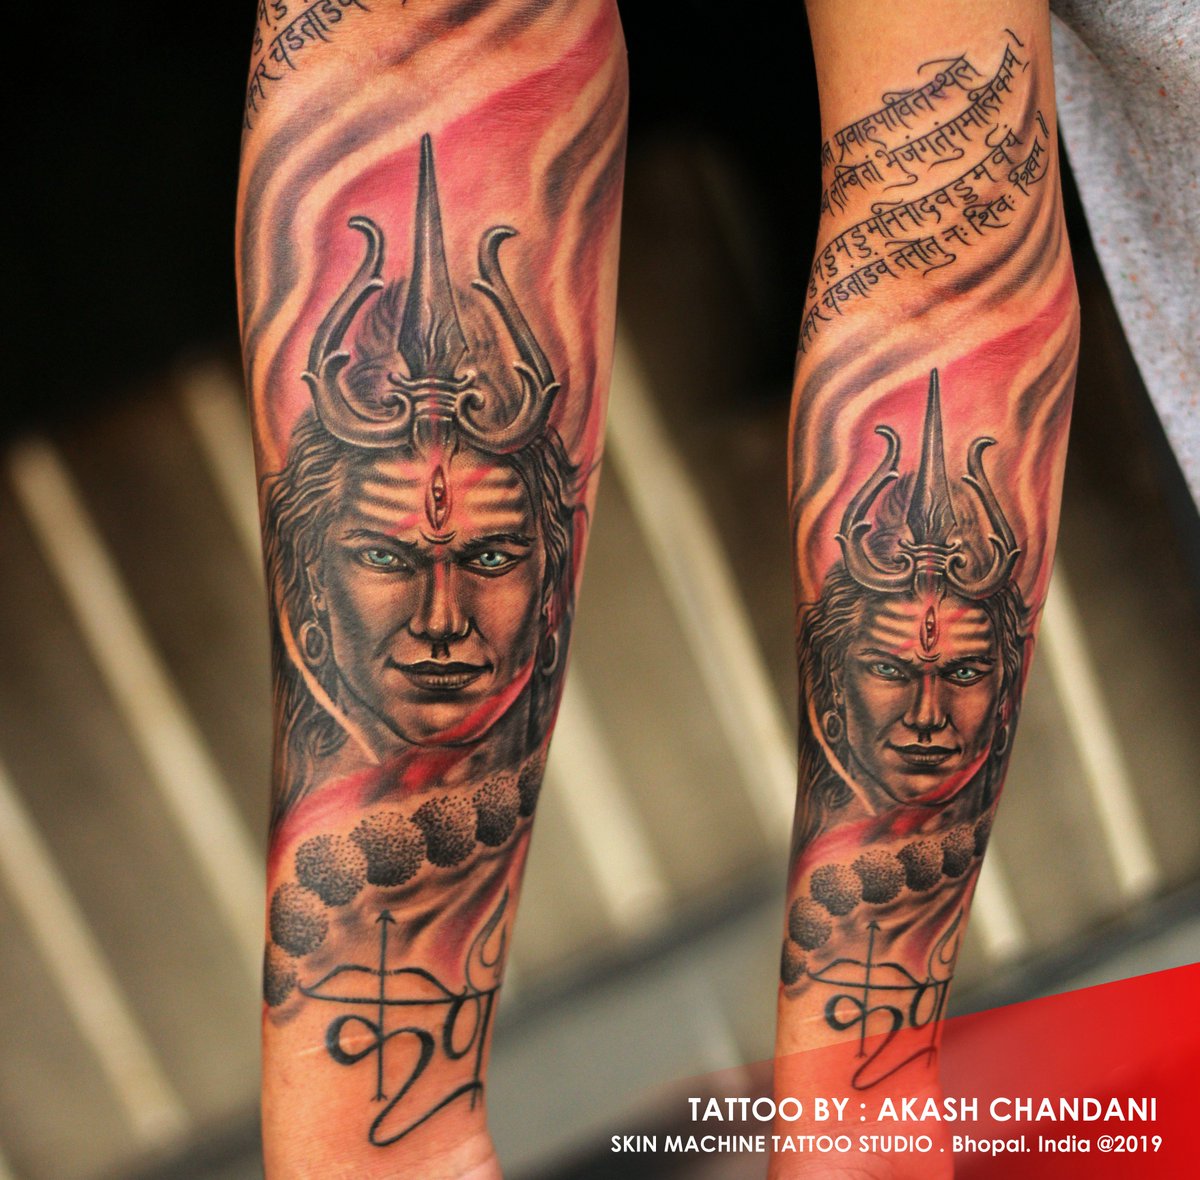 Shiva Tattoo done by Abhishek Saxena at Circle Tattoo Delhi :  u/circletattooindia